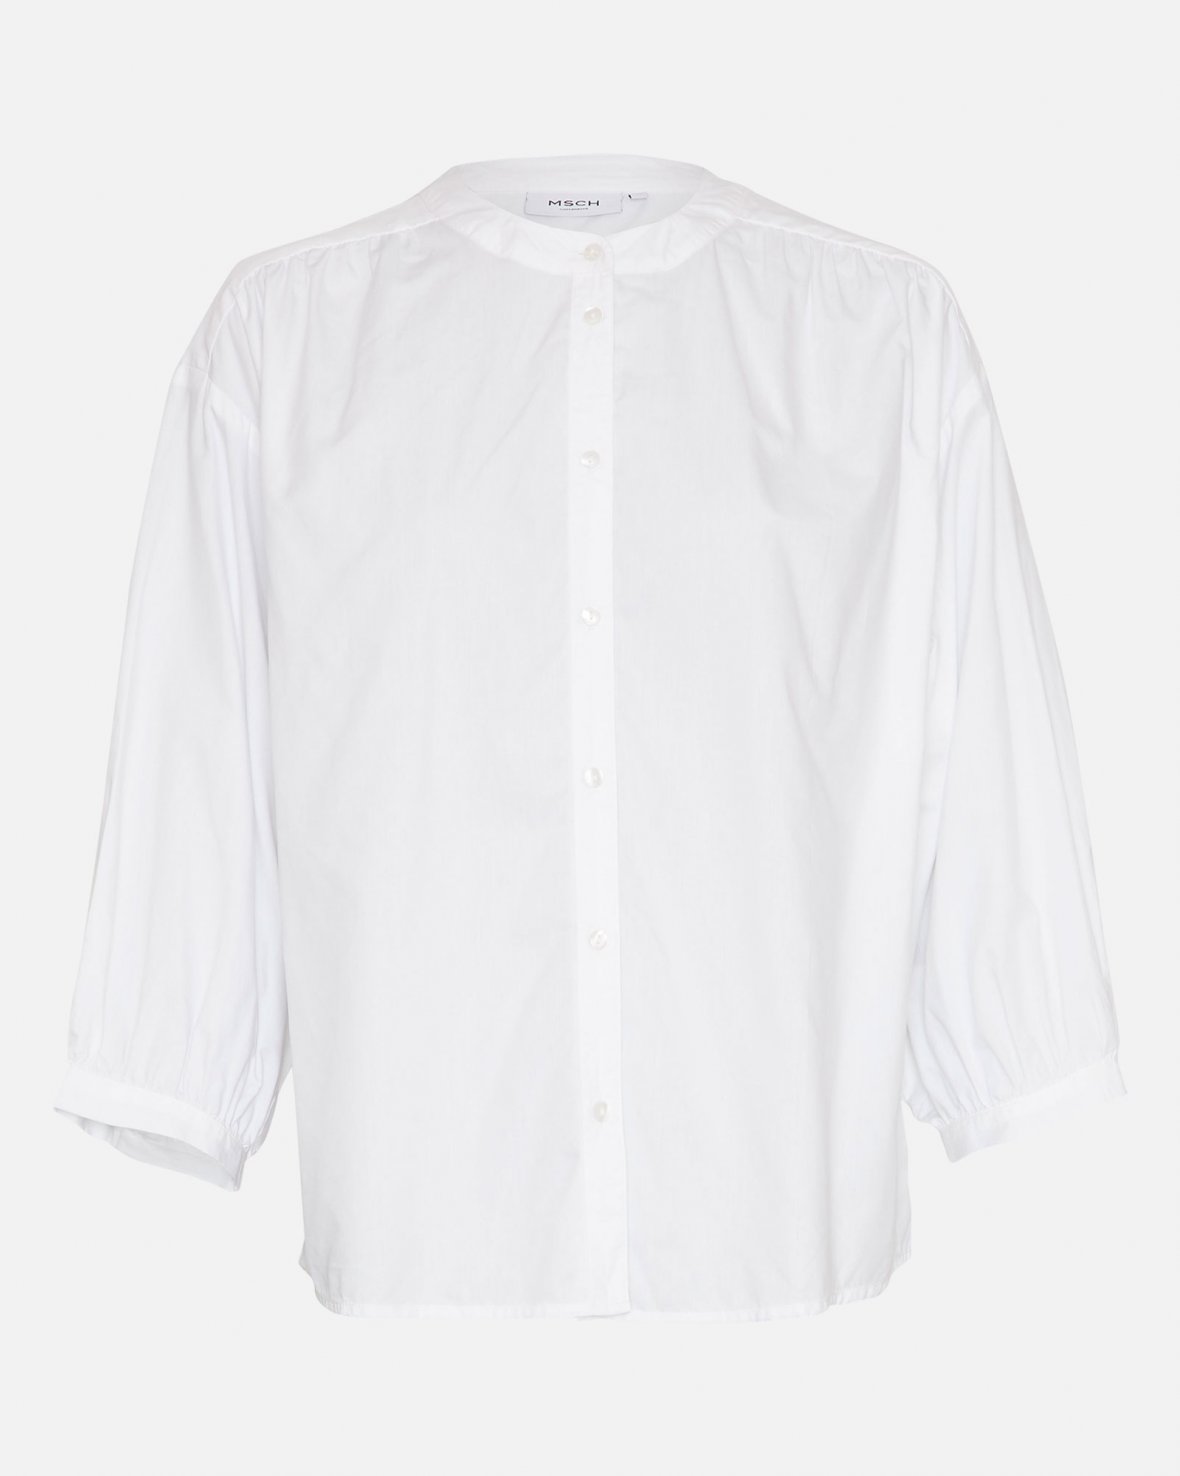 MSCH Copenhagen - MSCHAbiella 3/4 Shirt - White